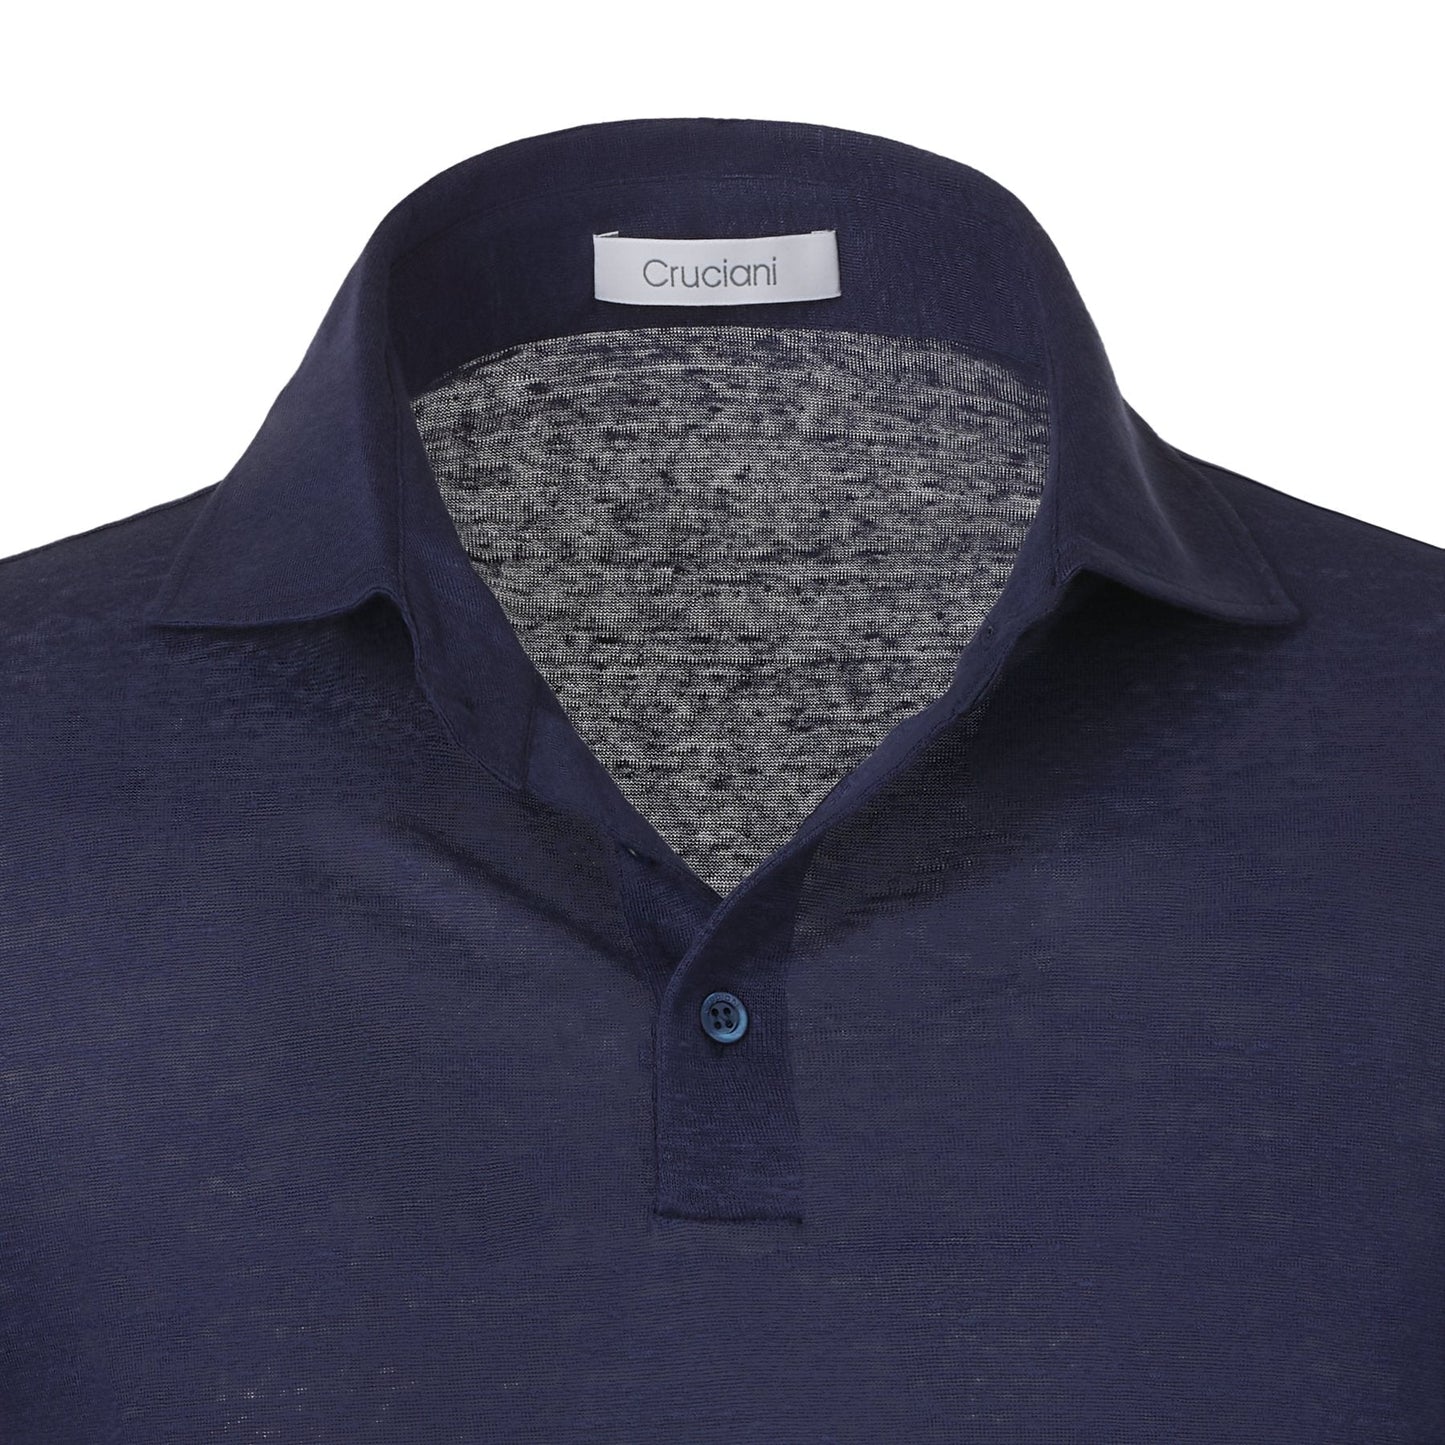 Cruciani Linen Polo Shirt in Blue - SARTALE